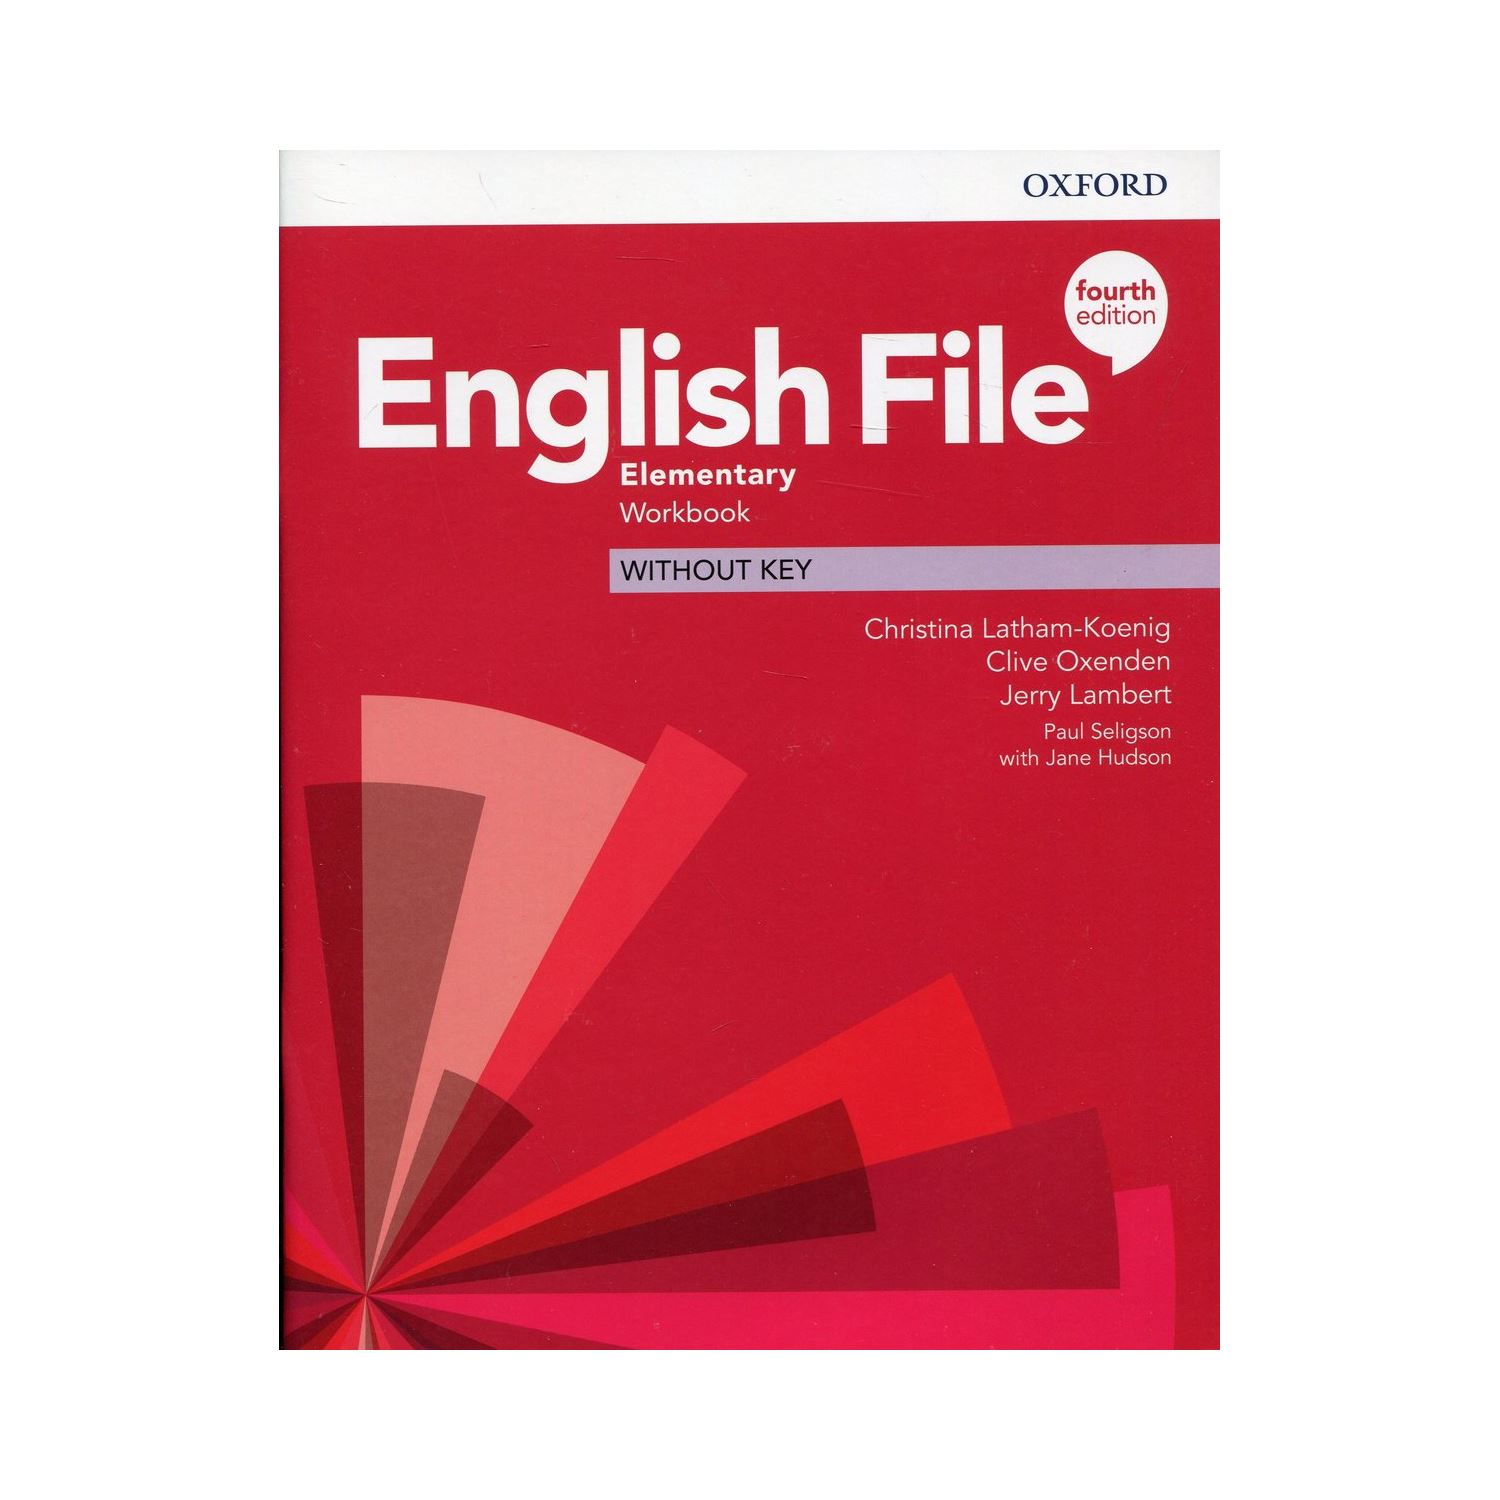 Английский книги English file. English file 4th Edition. English file Elementary fourth Edition. English file Upper Intermediate. English file advanced workbook